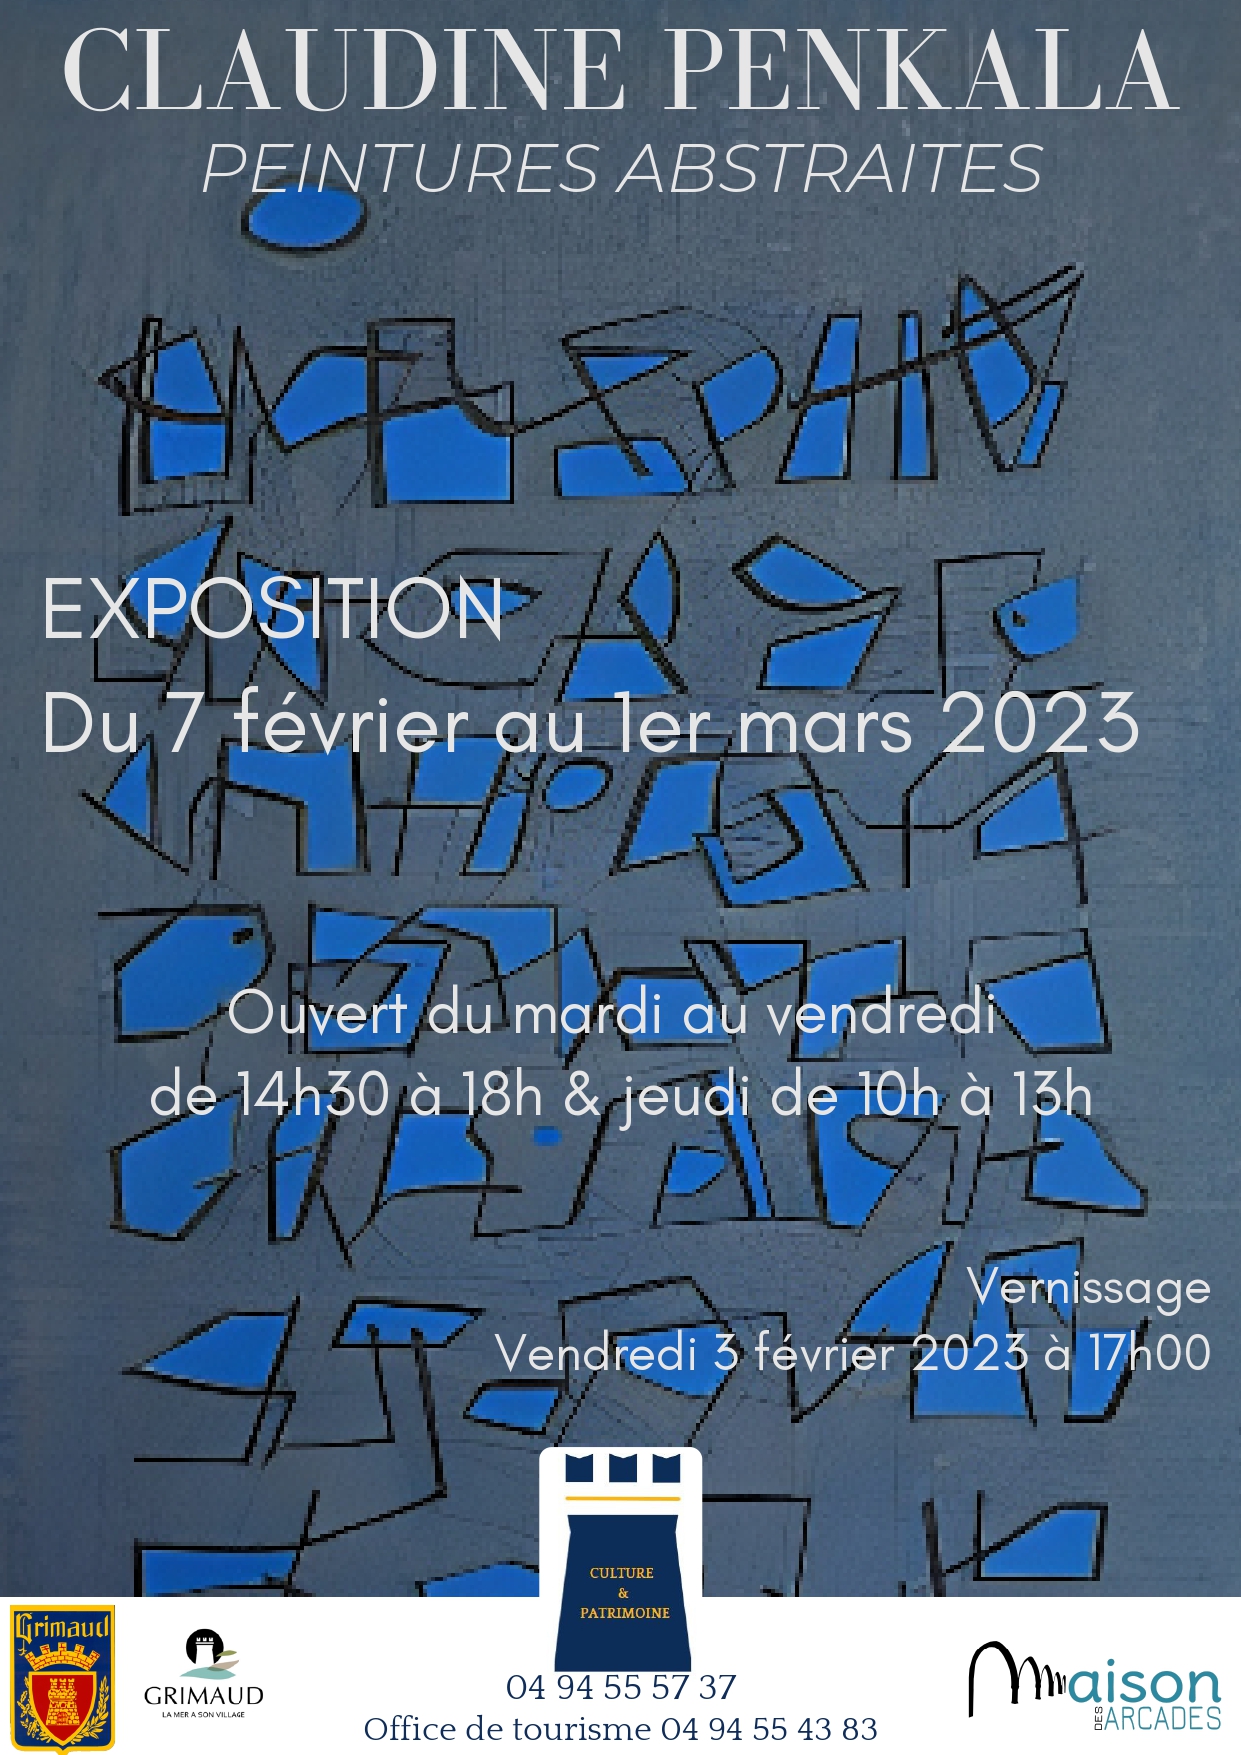 Friday, February 3, 2023: Opening of Claudine PENKALA's exhibition at the Maison des Arcades